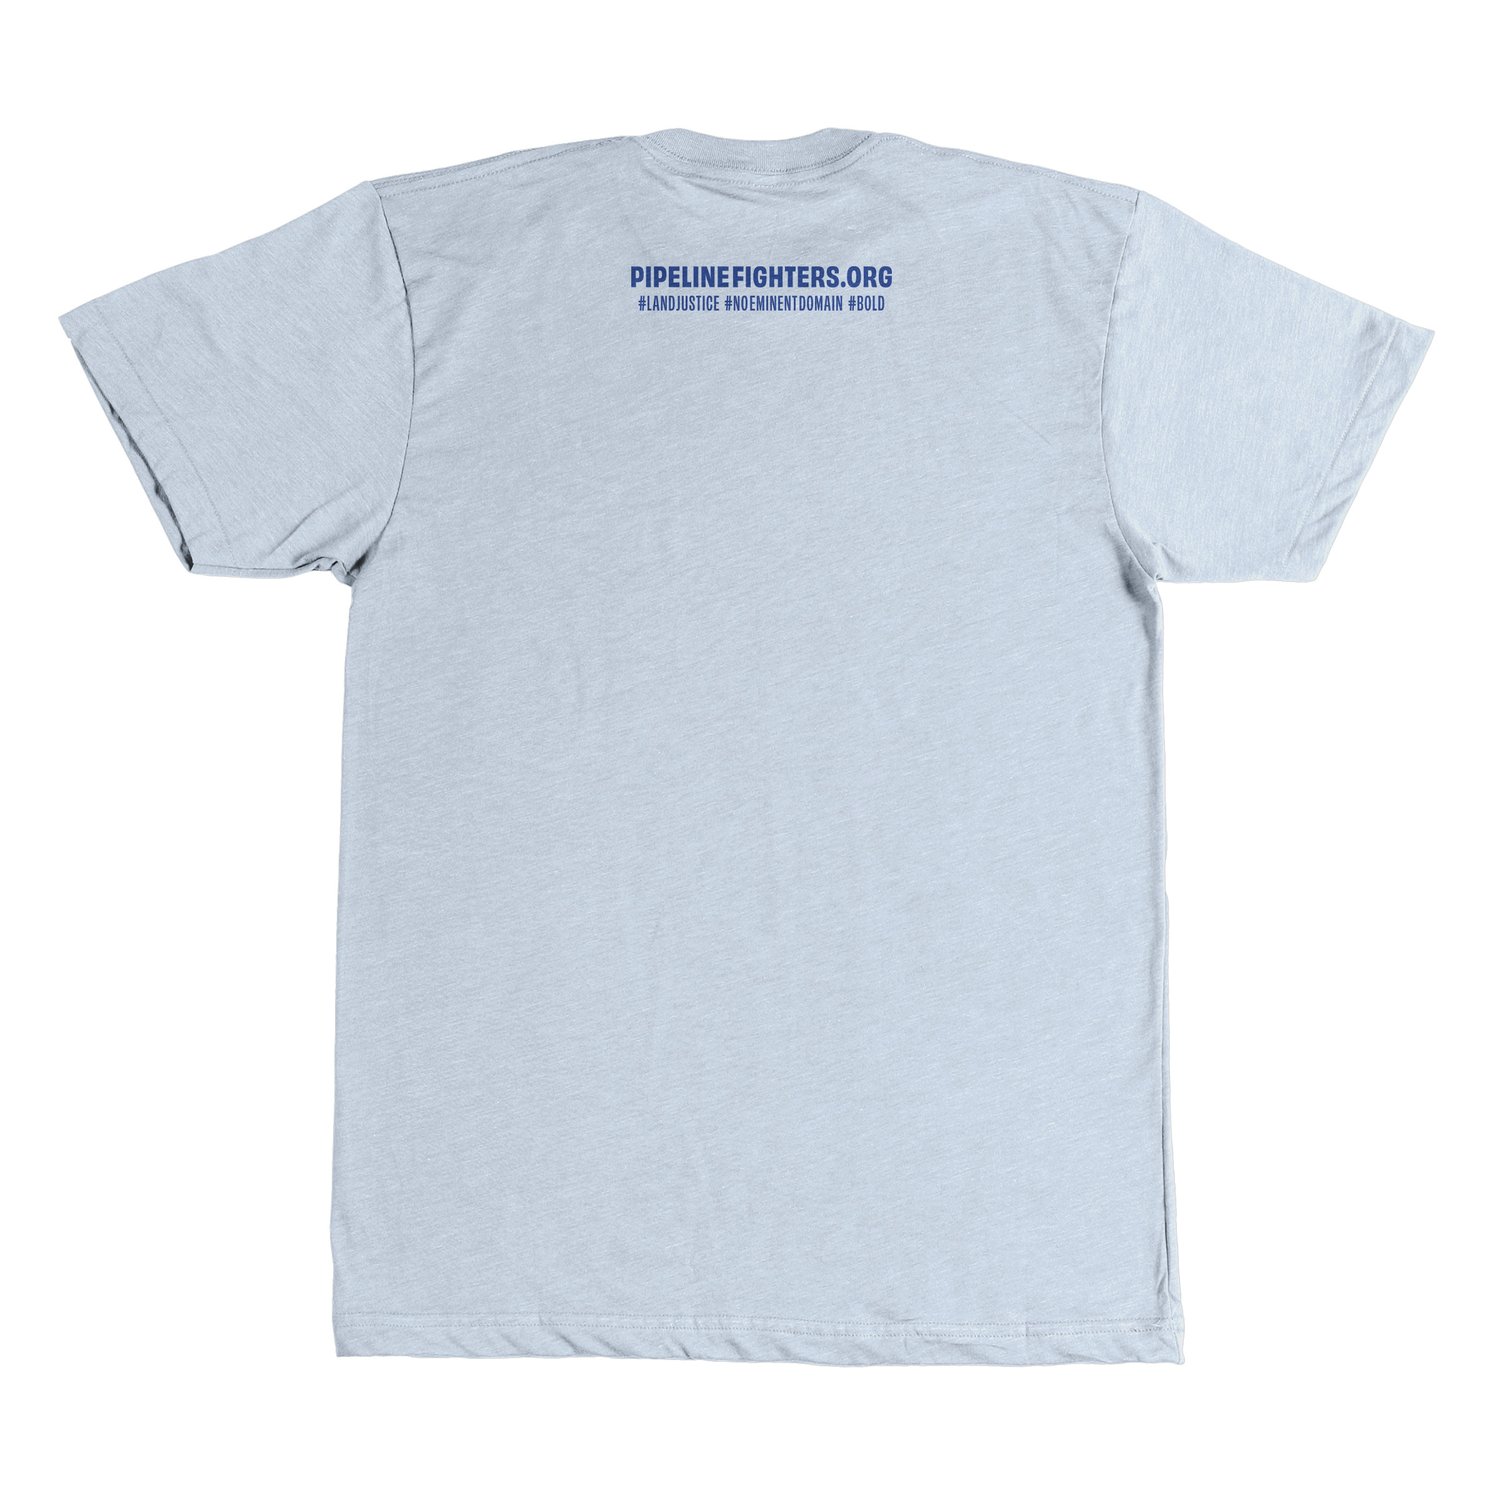 Image of South Dakota Pipeline Fighter t-shirt (grey short sleeve)